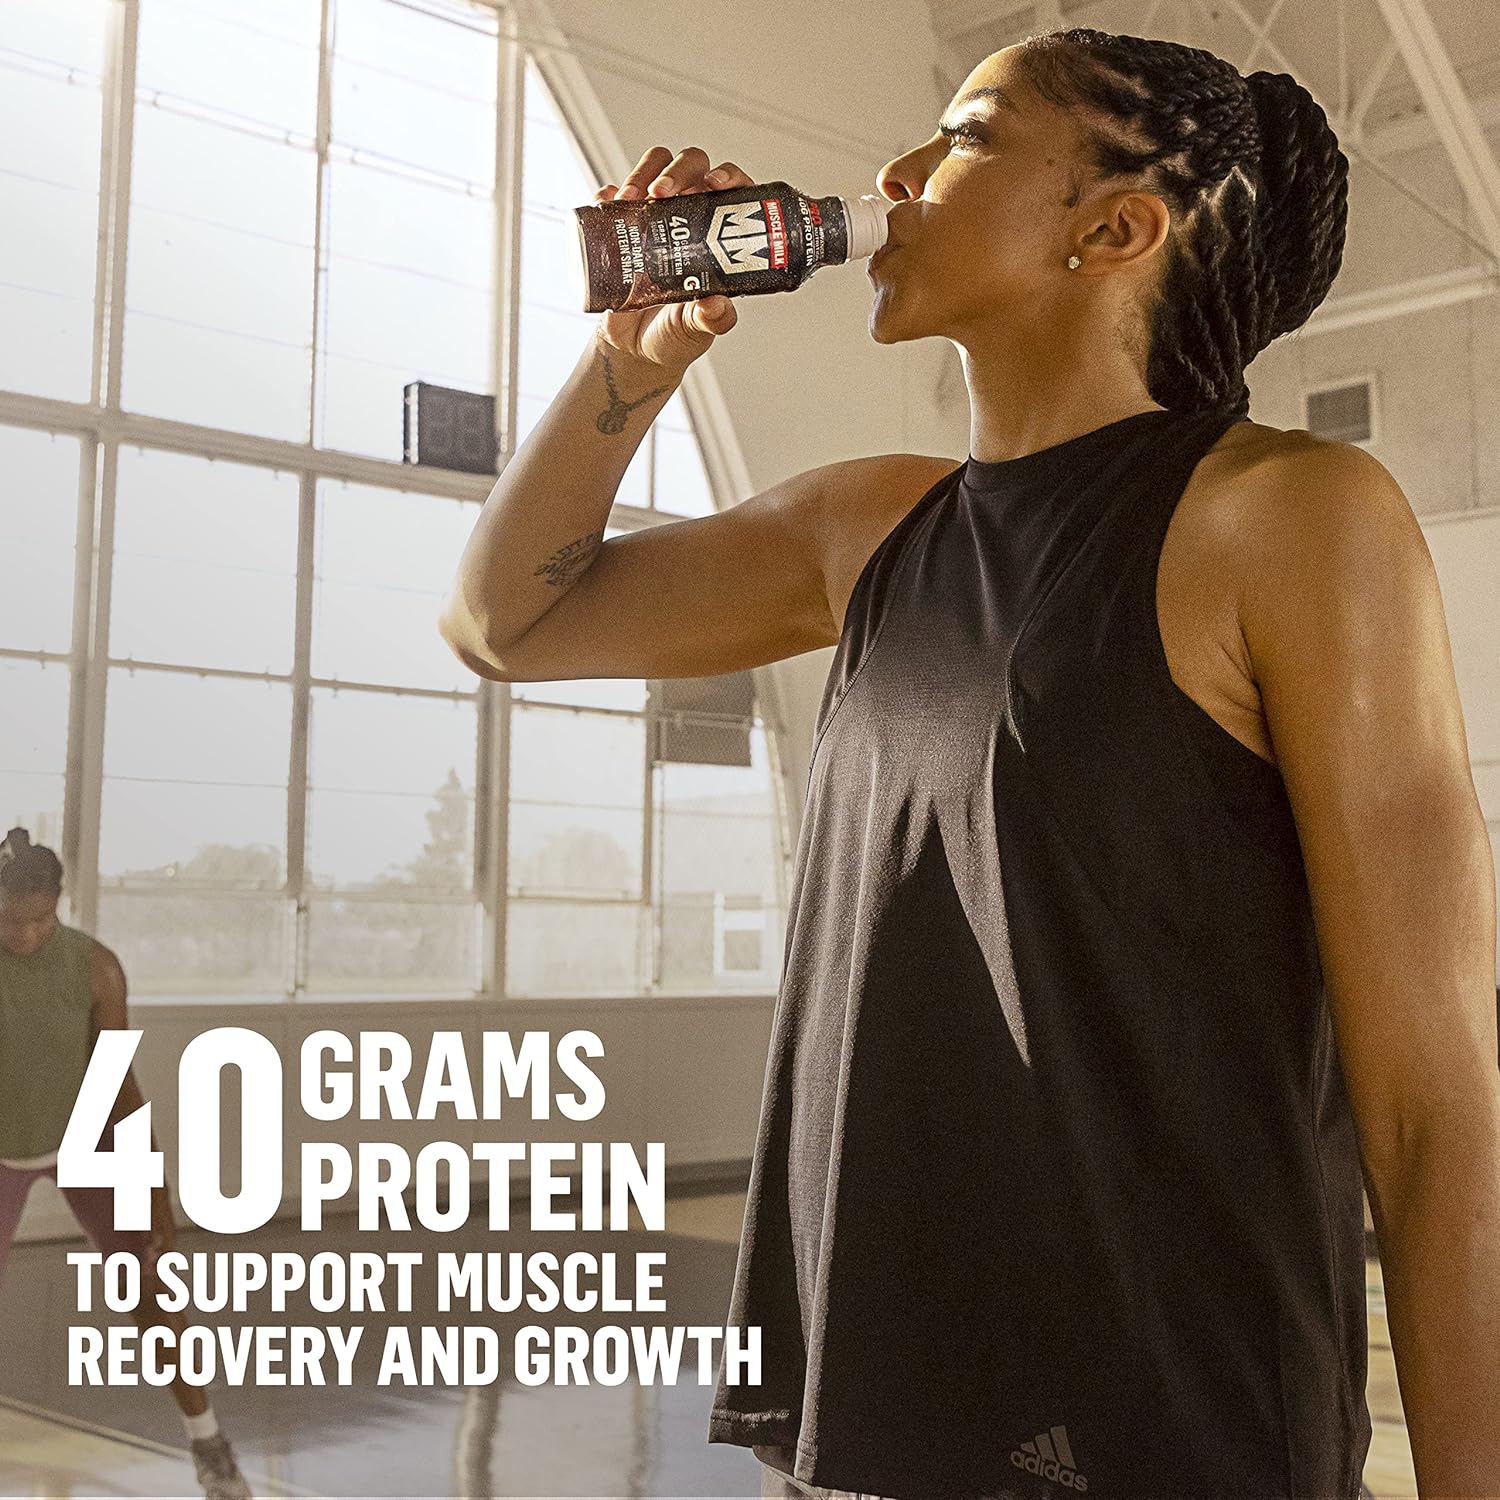 Muscle Milk Pro Series Protein Shake, Slammin' Strawberry, 40g Protein